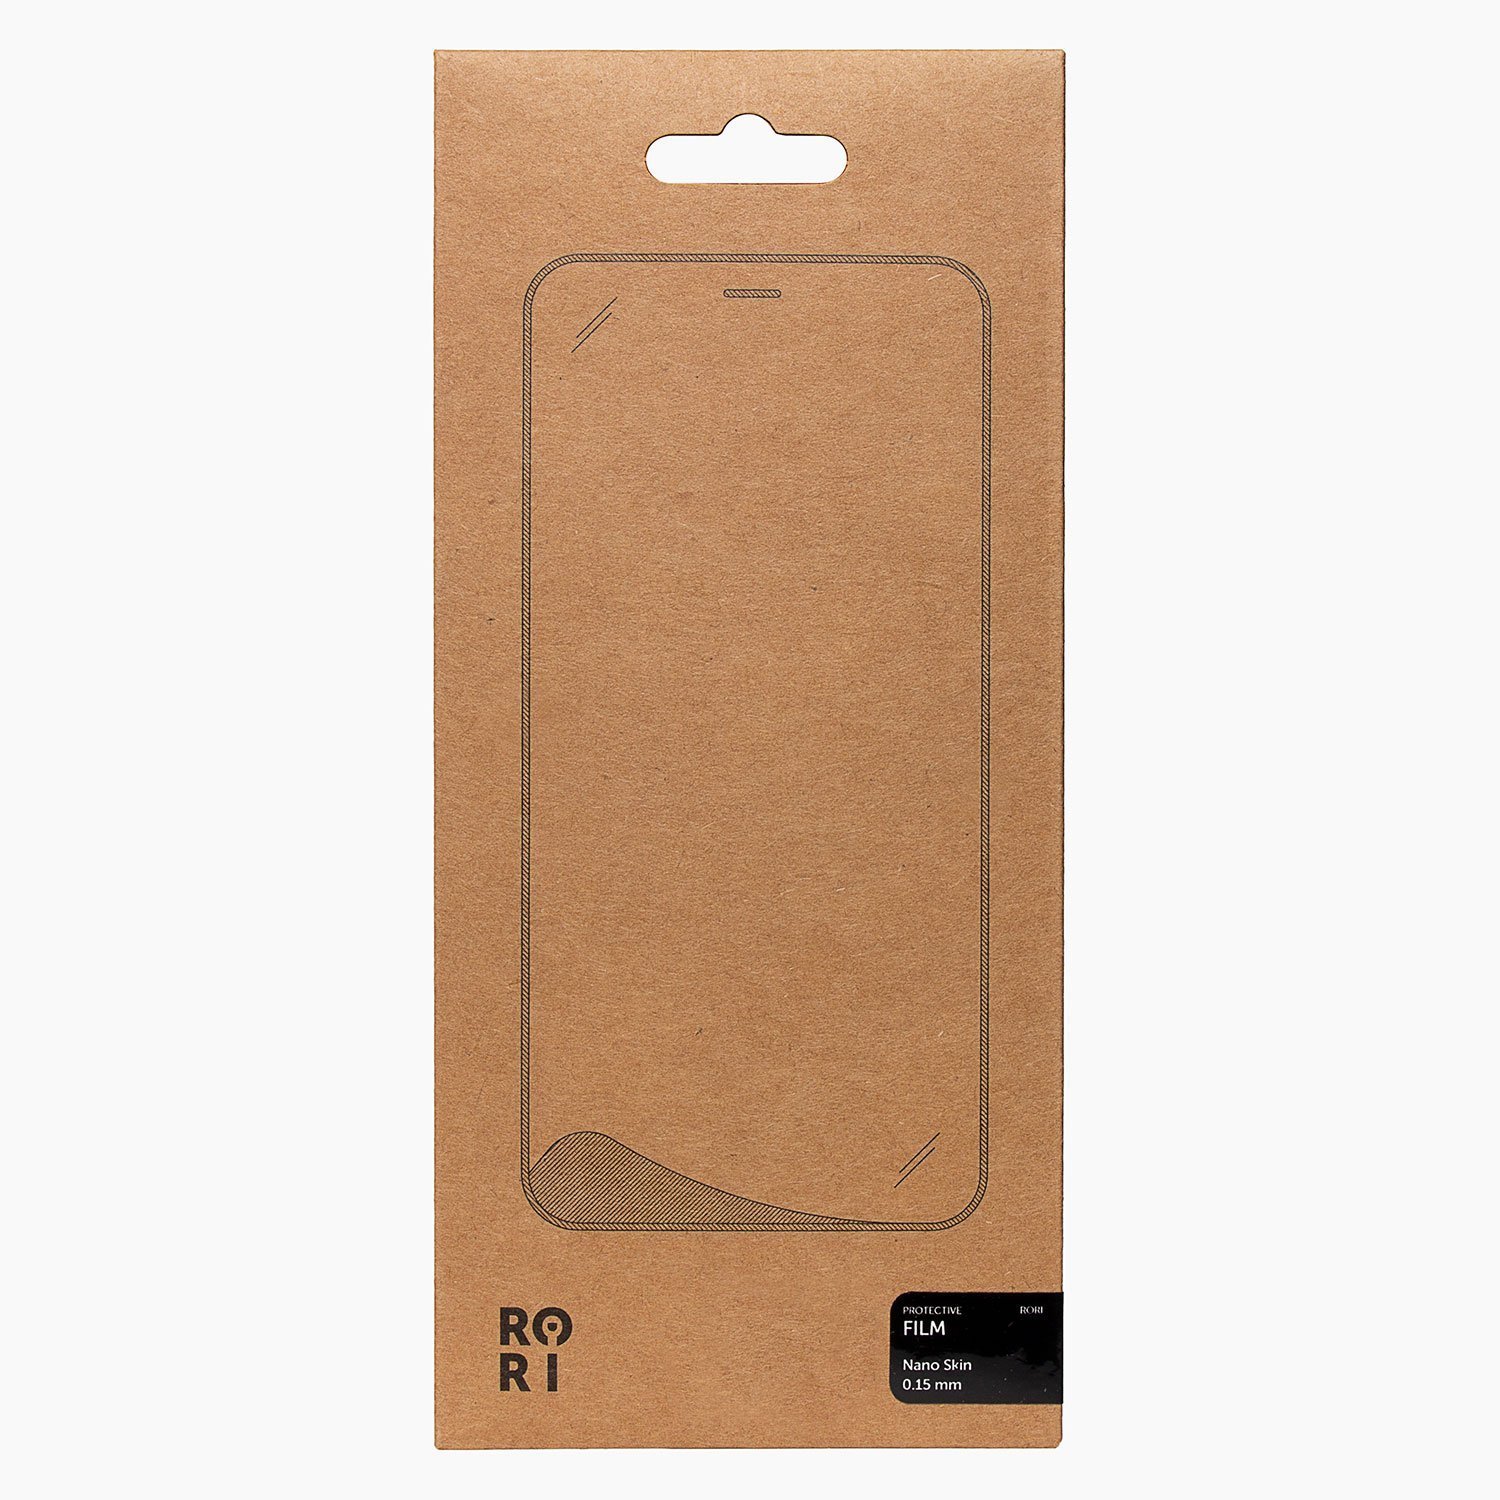 Защитная пленка Rori Polymer для экрана смартфона Xiaomi Redmi Note 8T, FullScreen, черная рамка (119545)